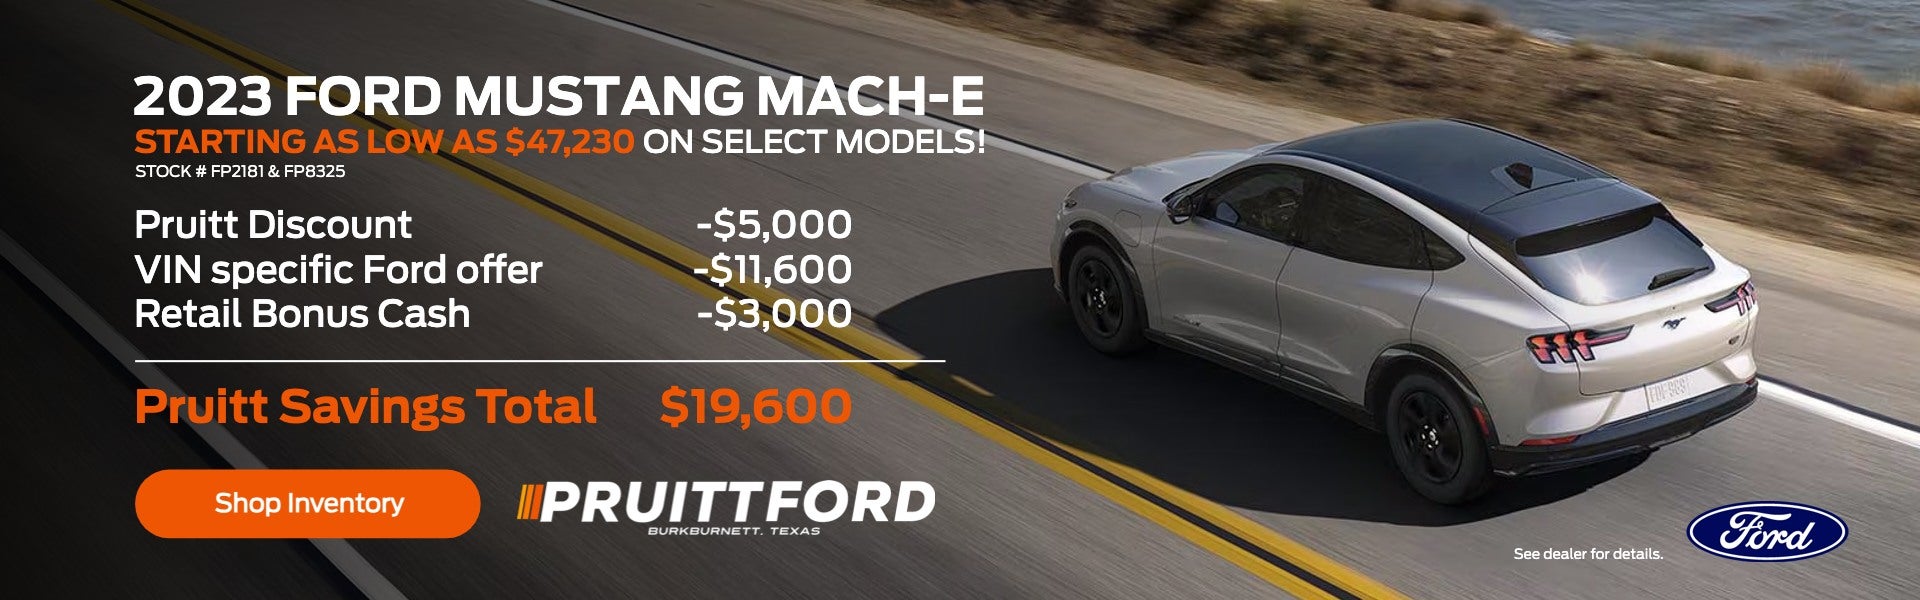 2023 Ford Mustang Mach-E Savings